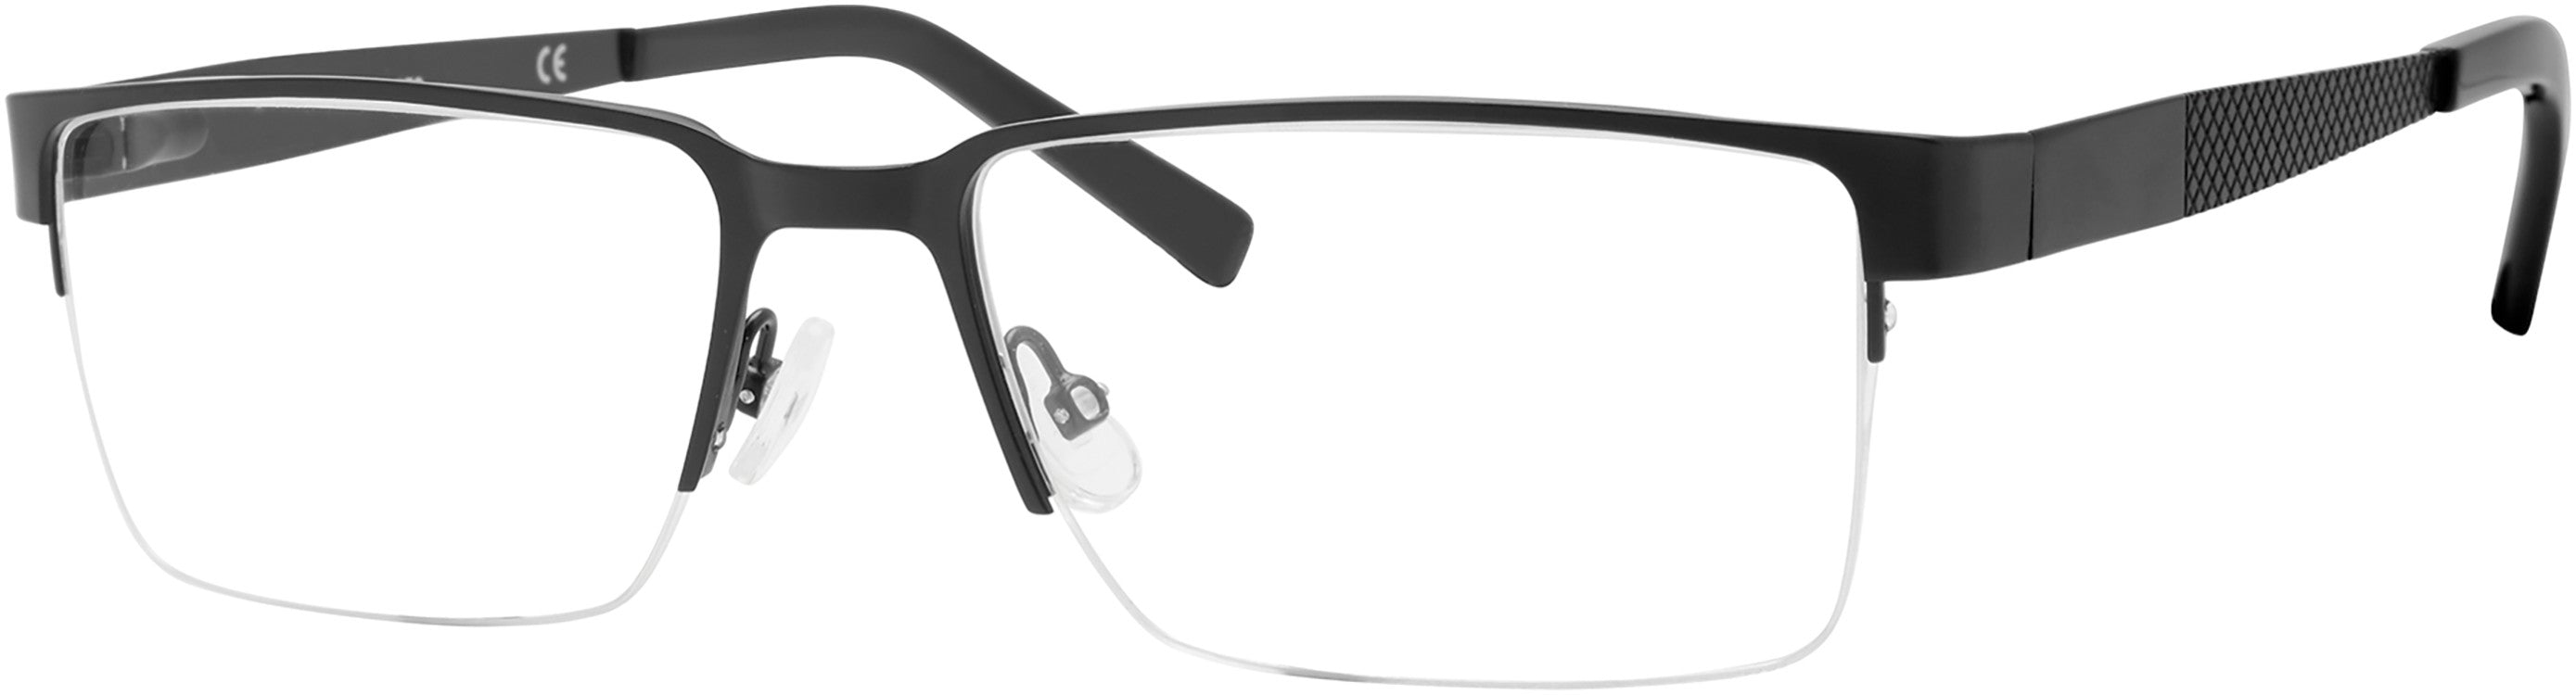  Claiborne 246 Rectangular Eyeglasses 0003-0003  Matte Black (00 Demo Lens)